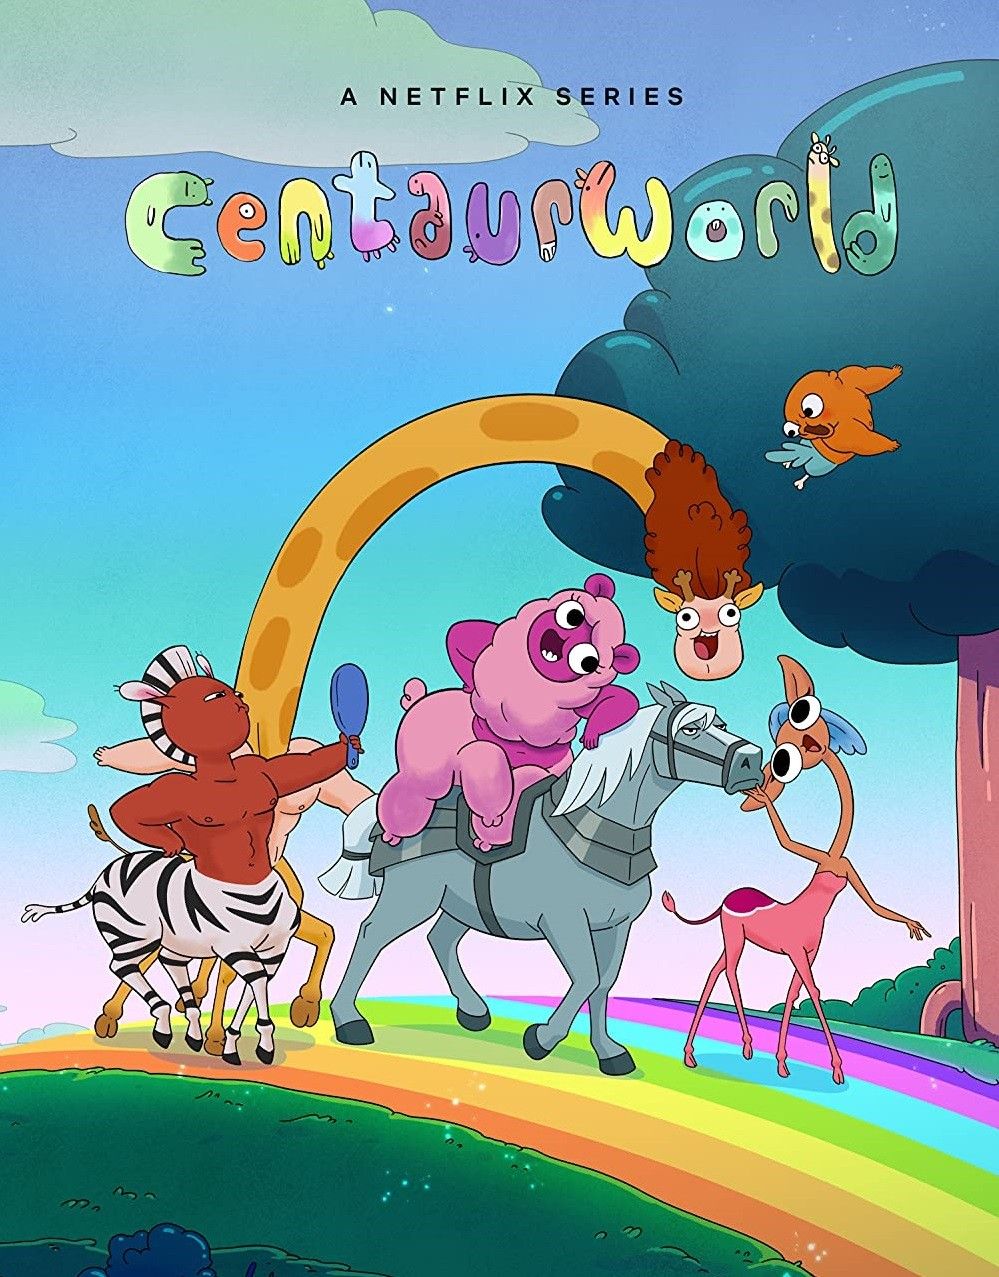 Centaurworld (2021) S02 Hindi Dubbed Complete Series HDRip download full movie